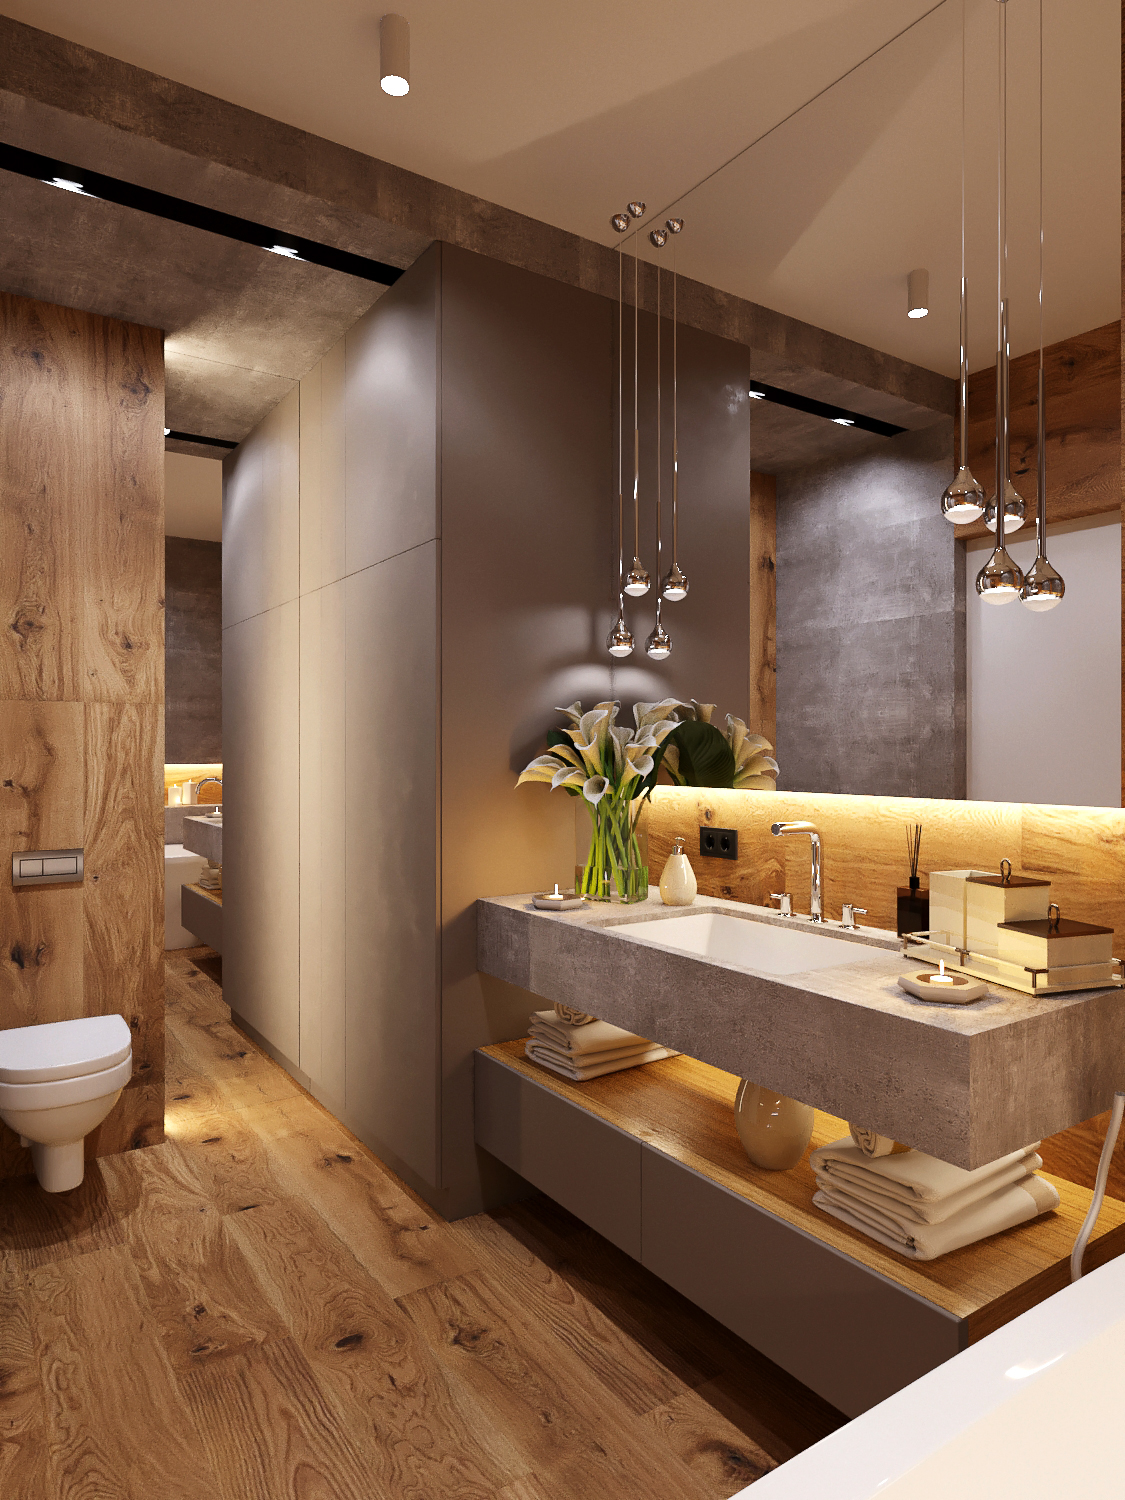 Bathroom Interior Design: A Relaxing Retreat